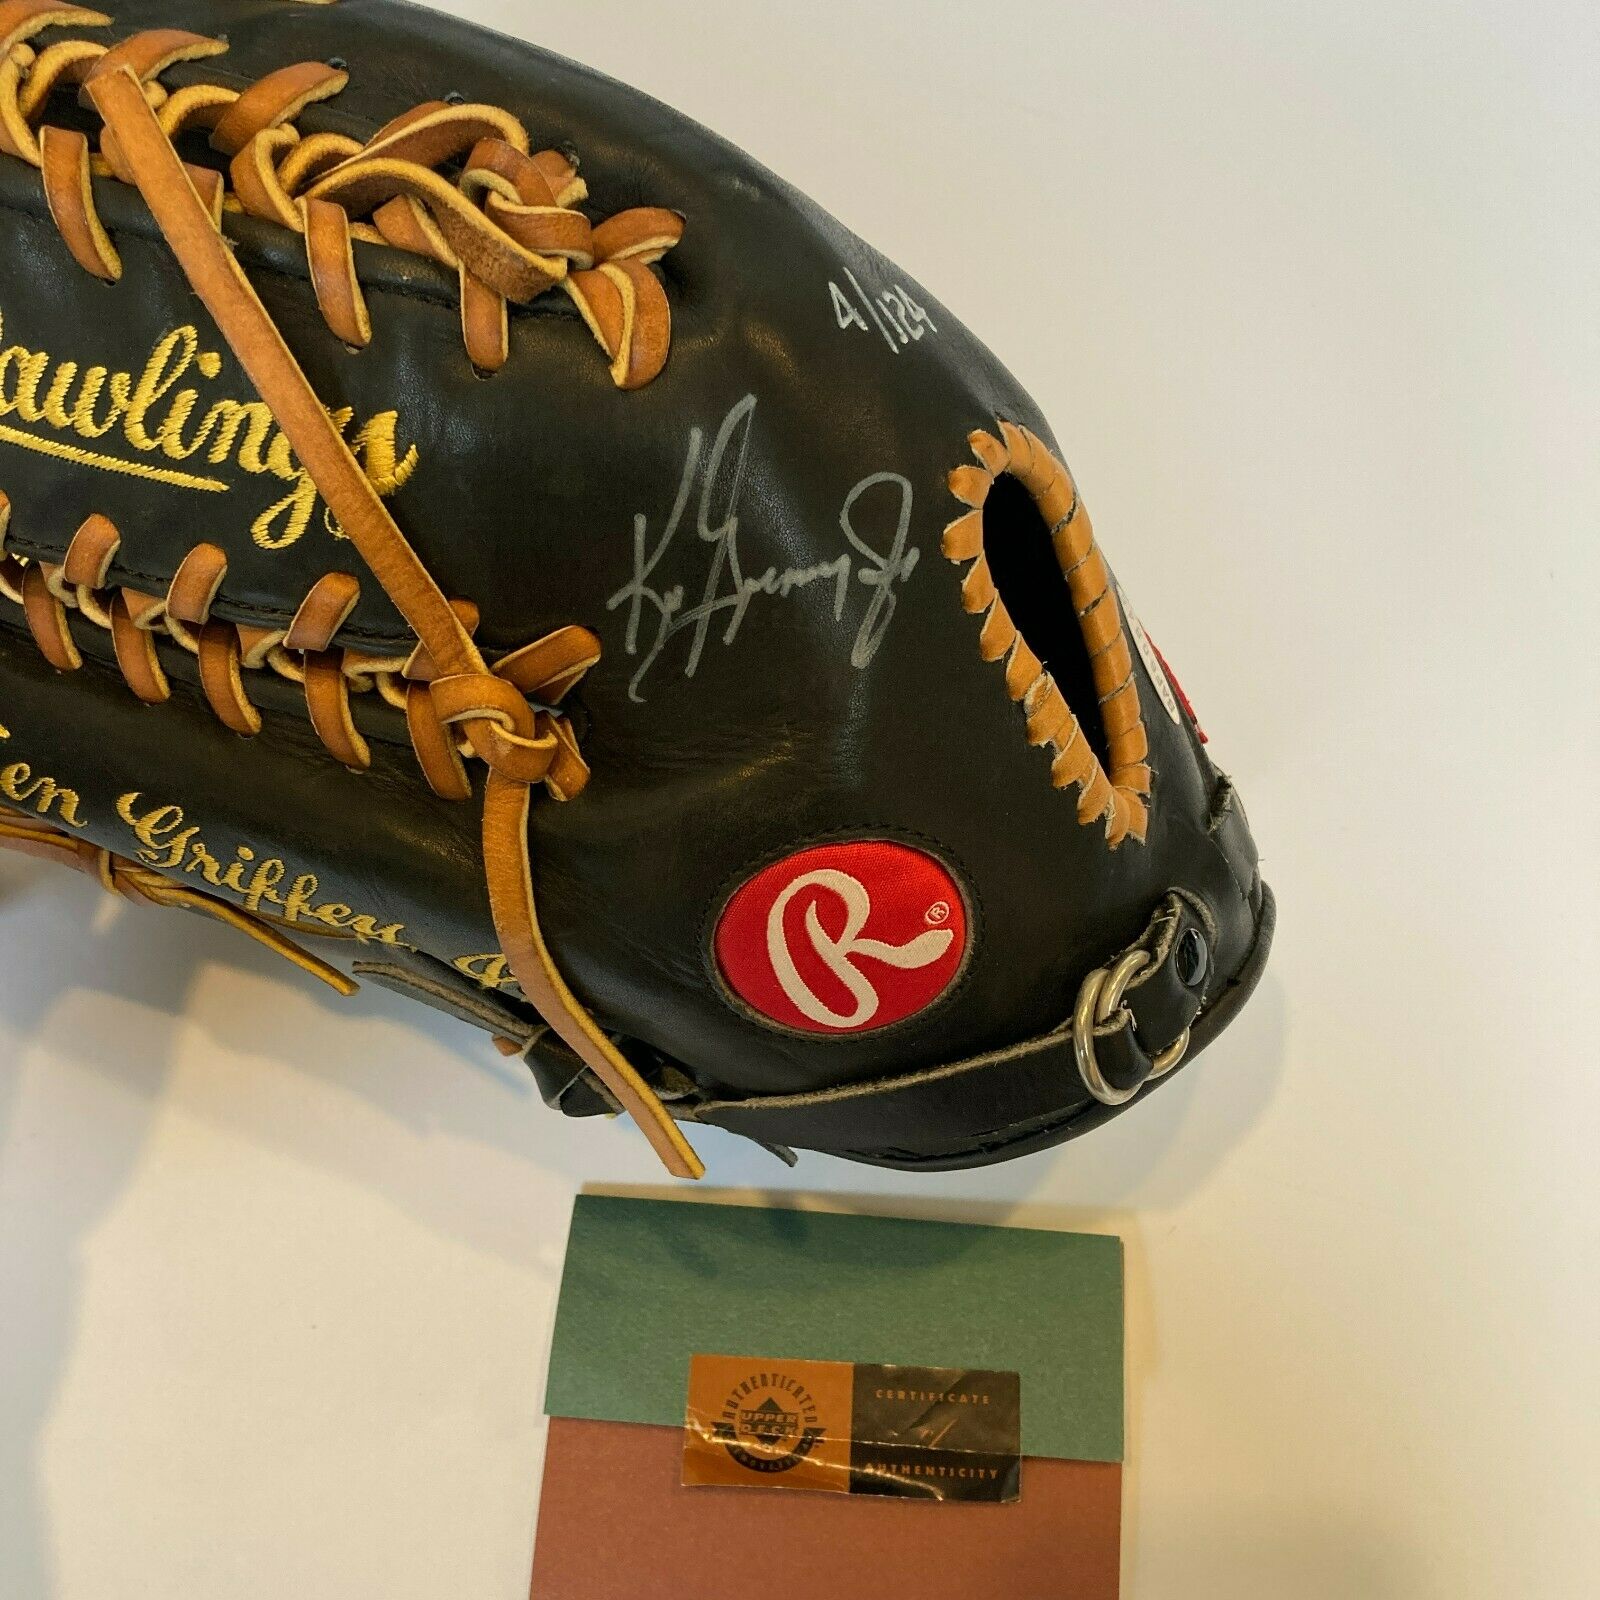 Sold at Auction: Ken Griffey Jr. Autographed Gold Glove